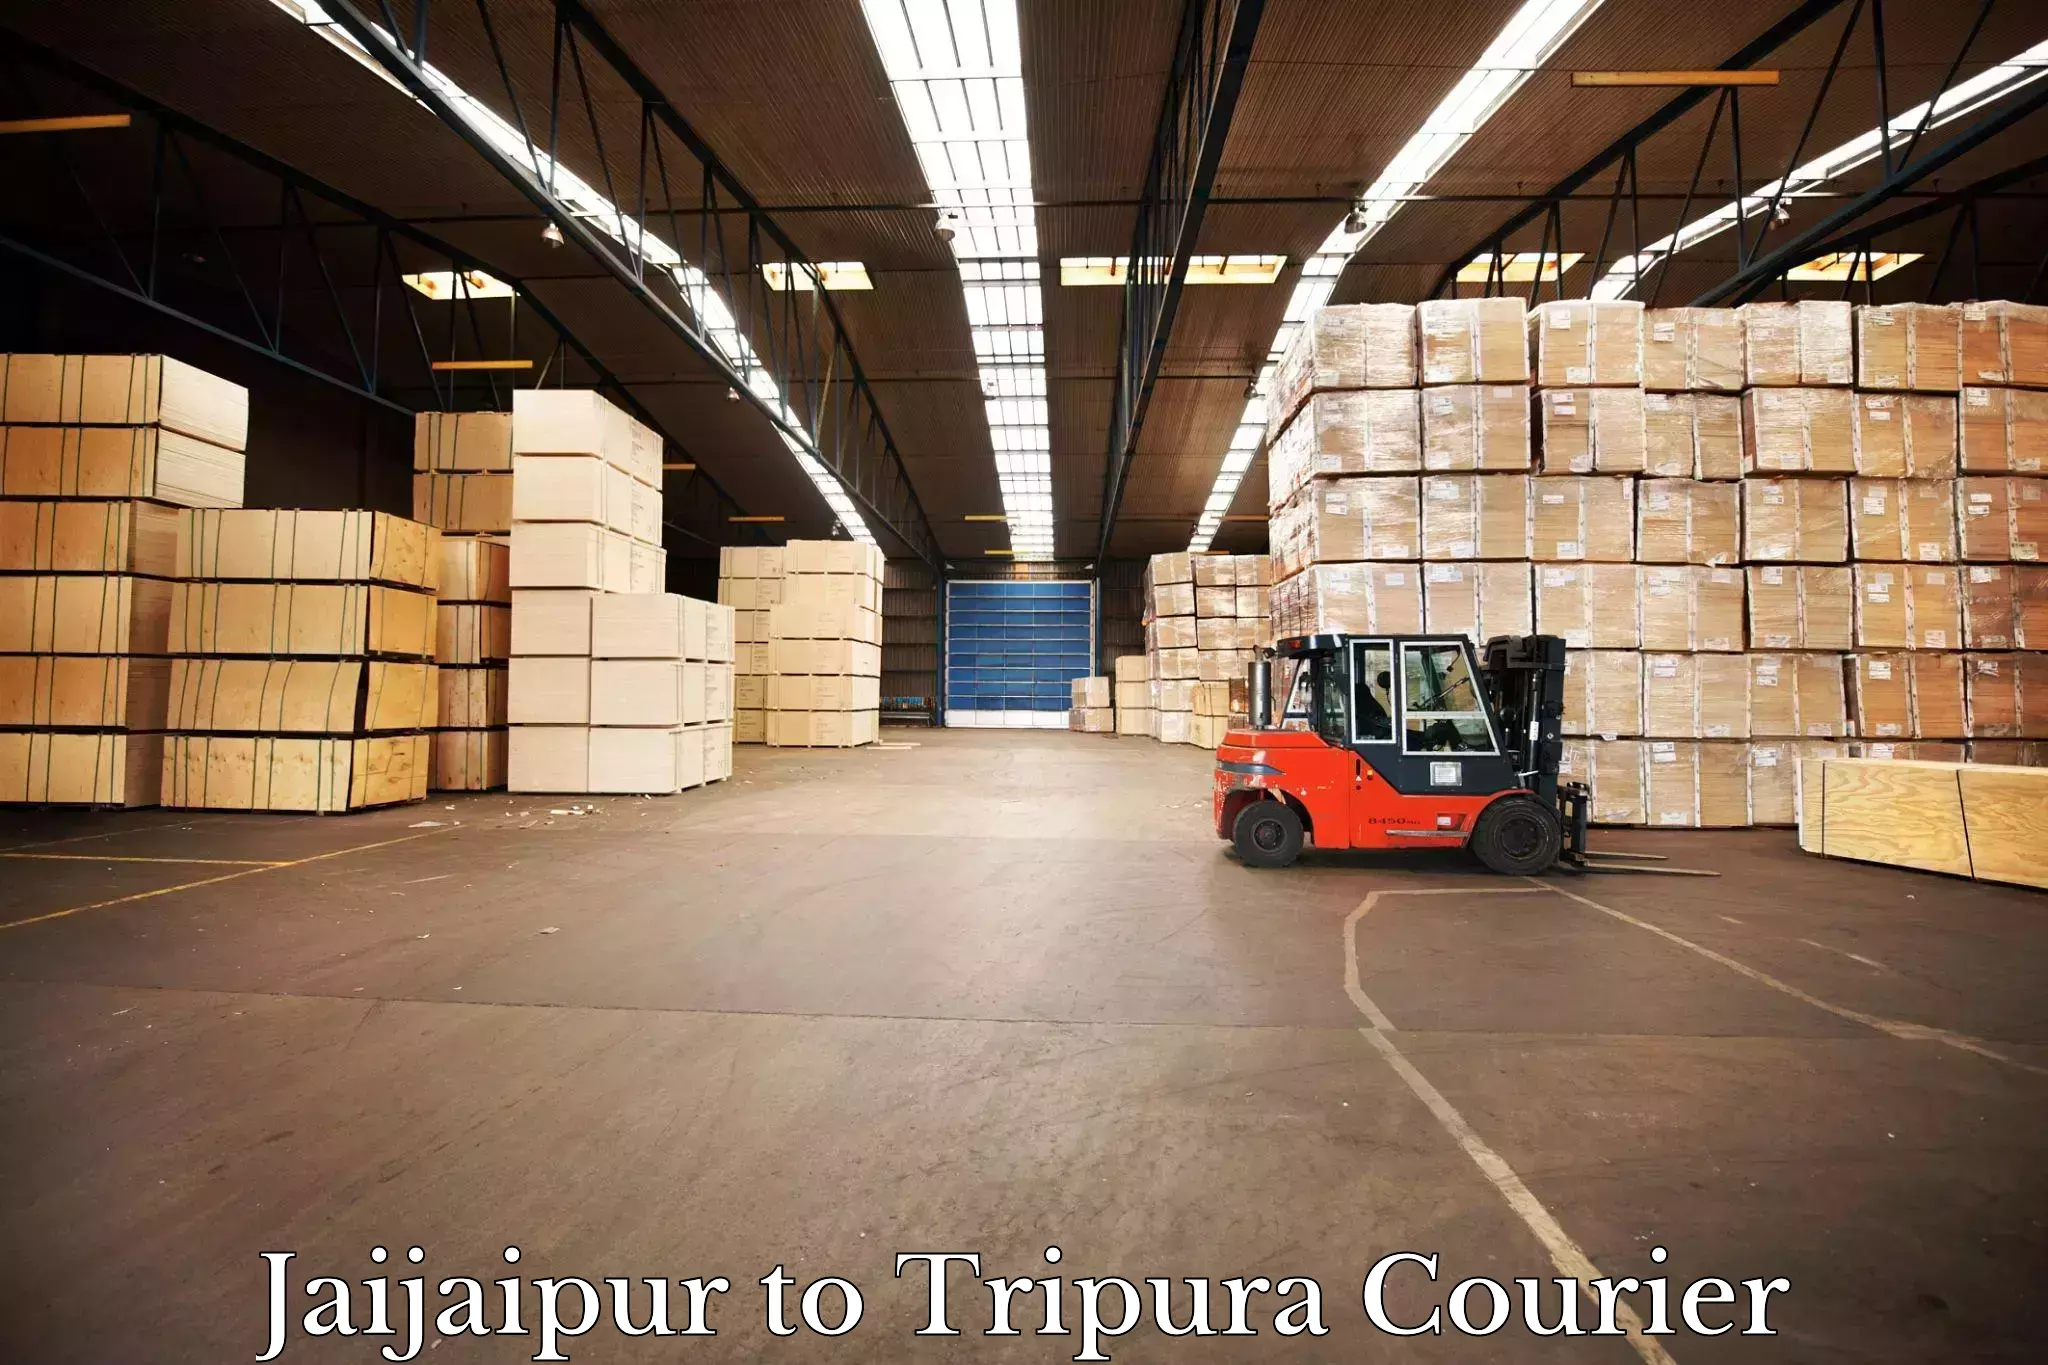 Comprehensive parcel tracking Jaijaipur to Udaipur Tripura